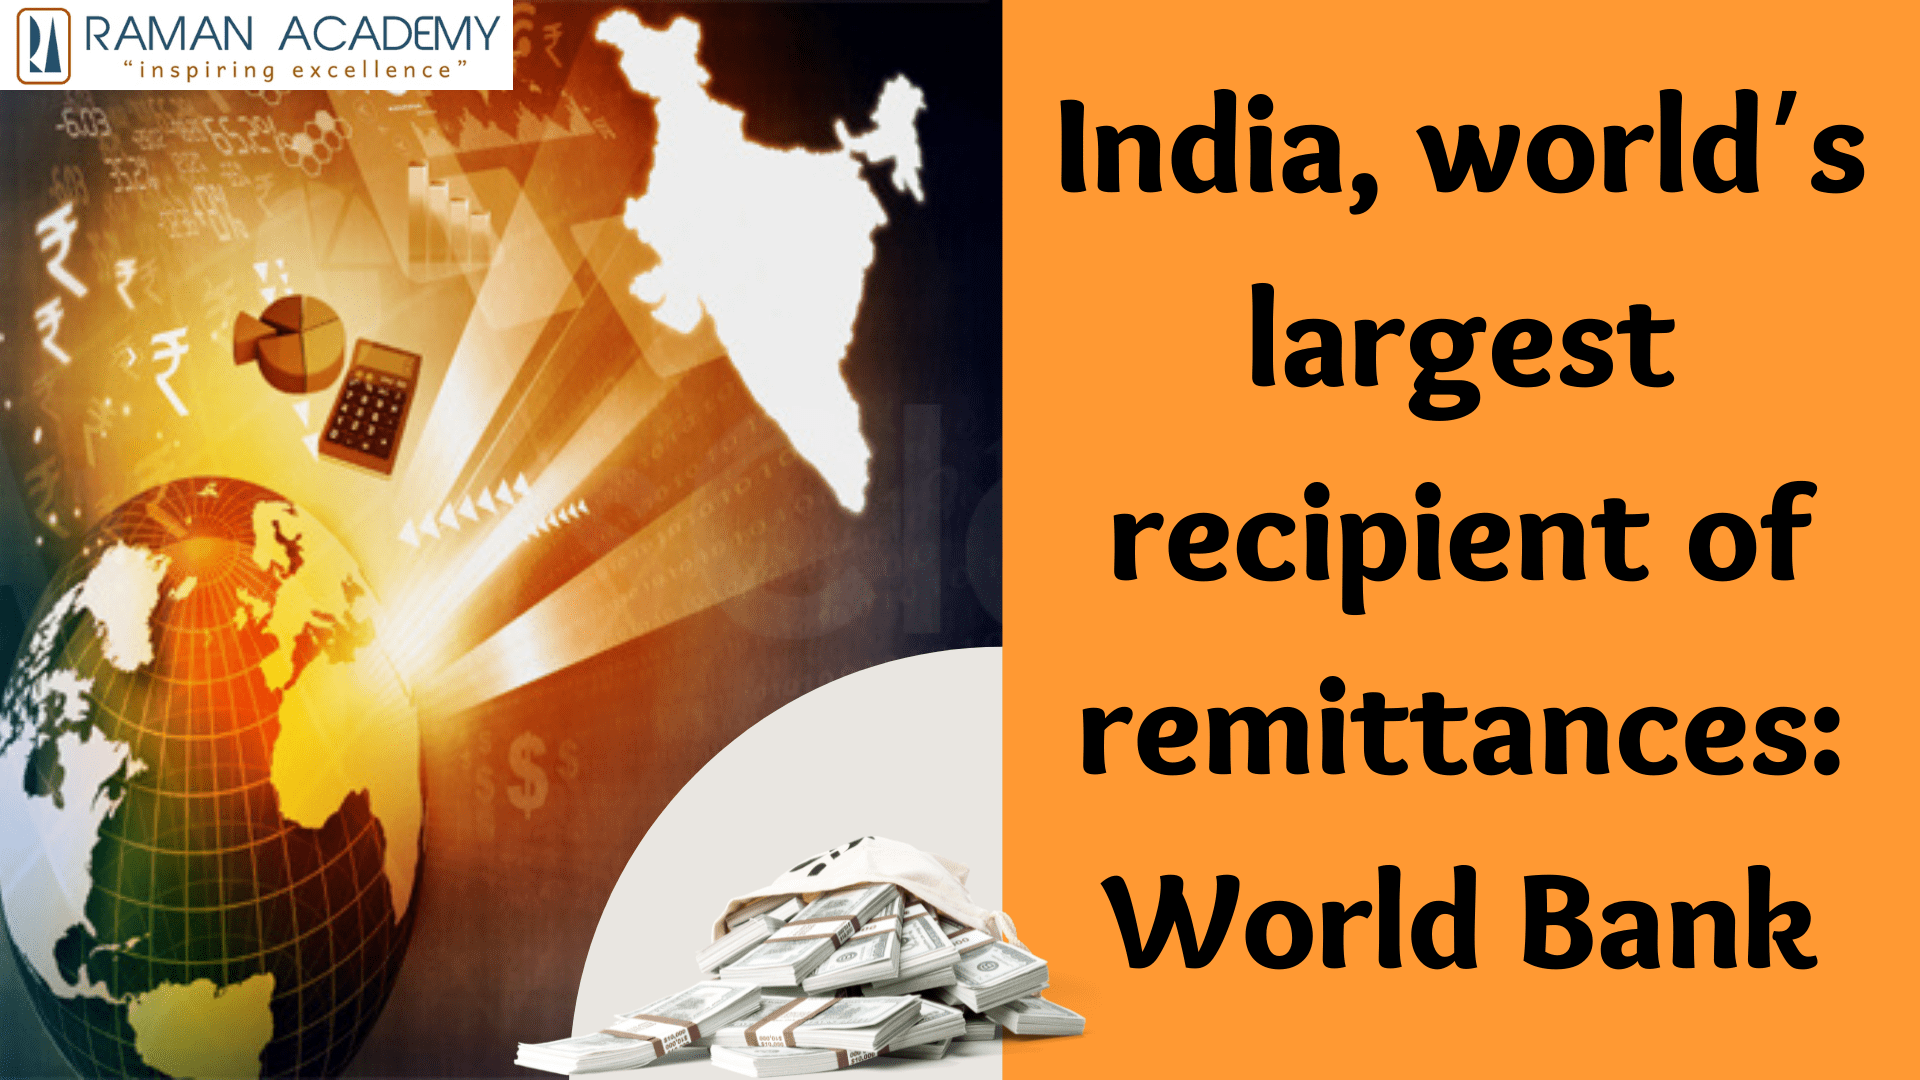 India, world’s largest recipient of remittances: World Bank